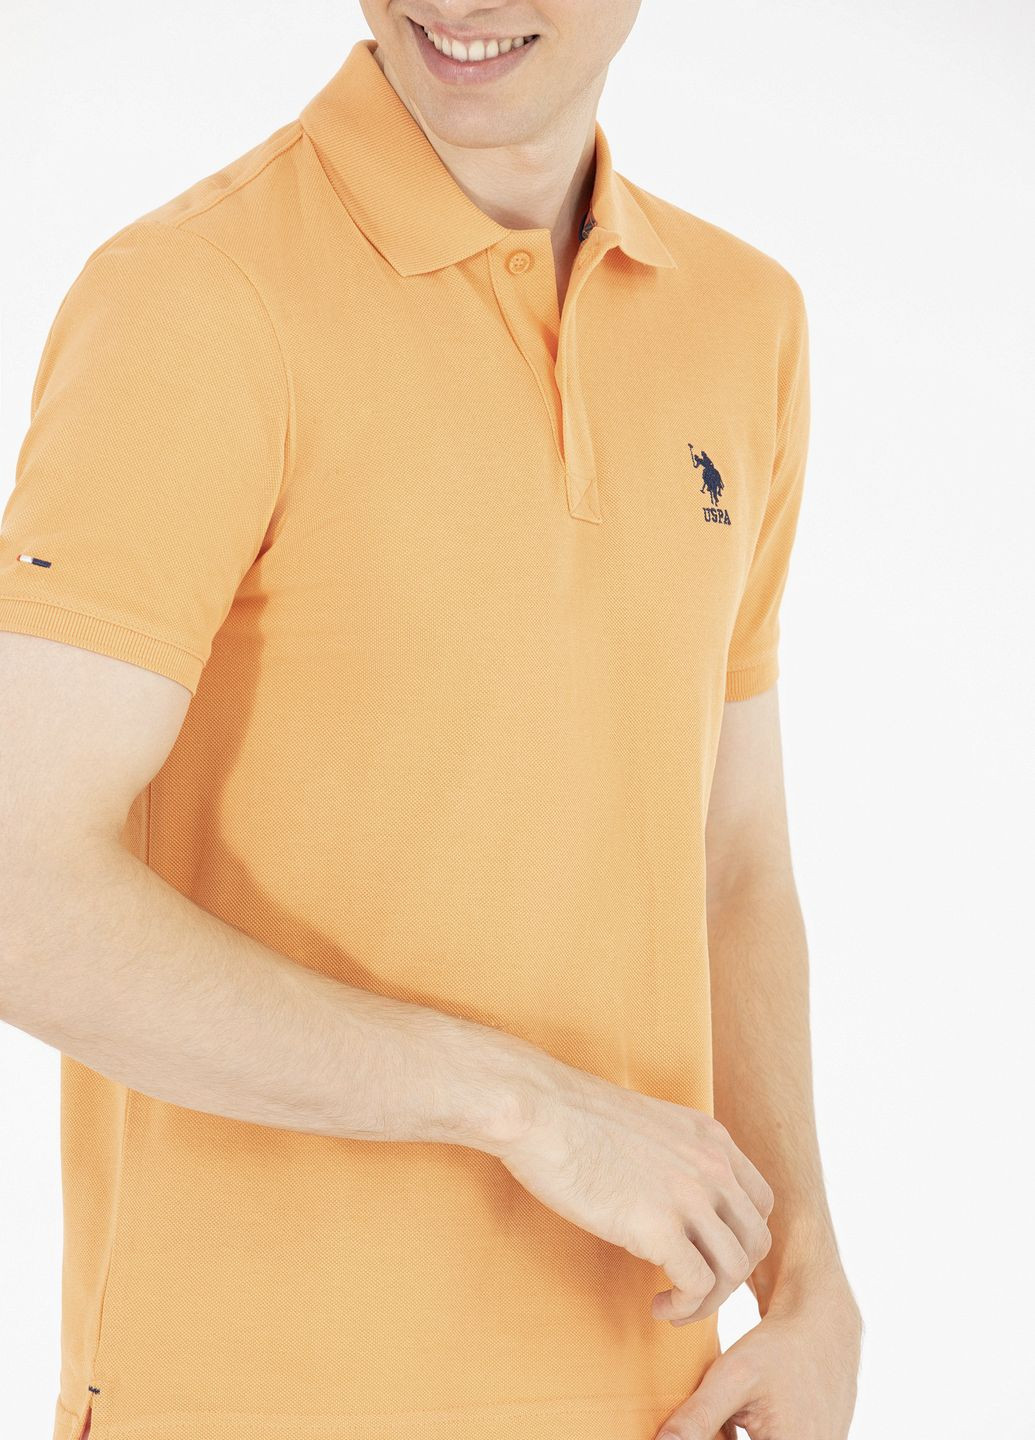 Оранжевая футболка поло мужское U.S. Polo Assn.